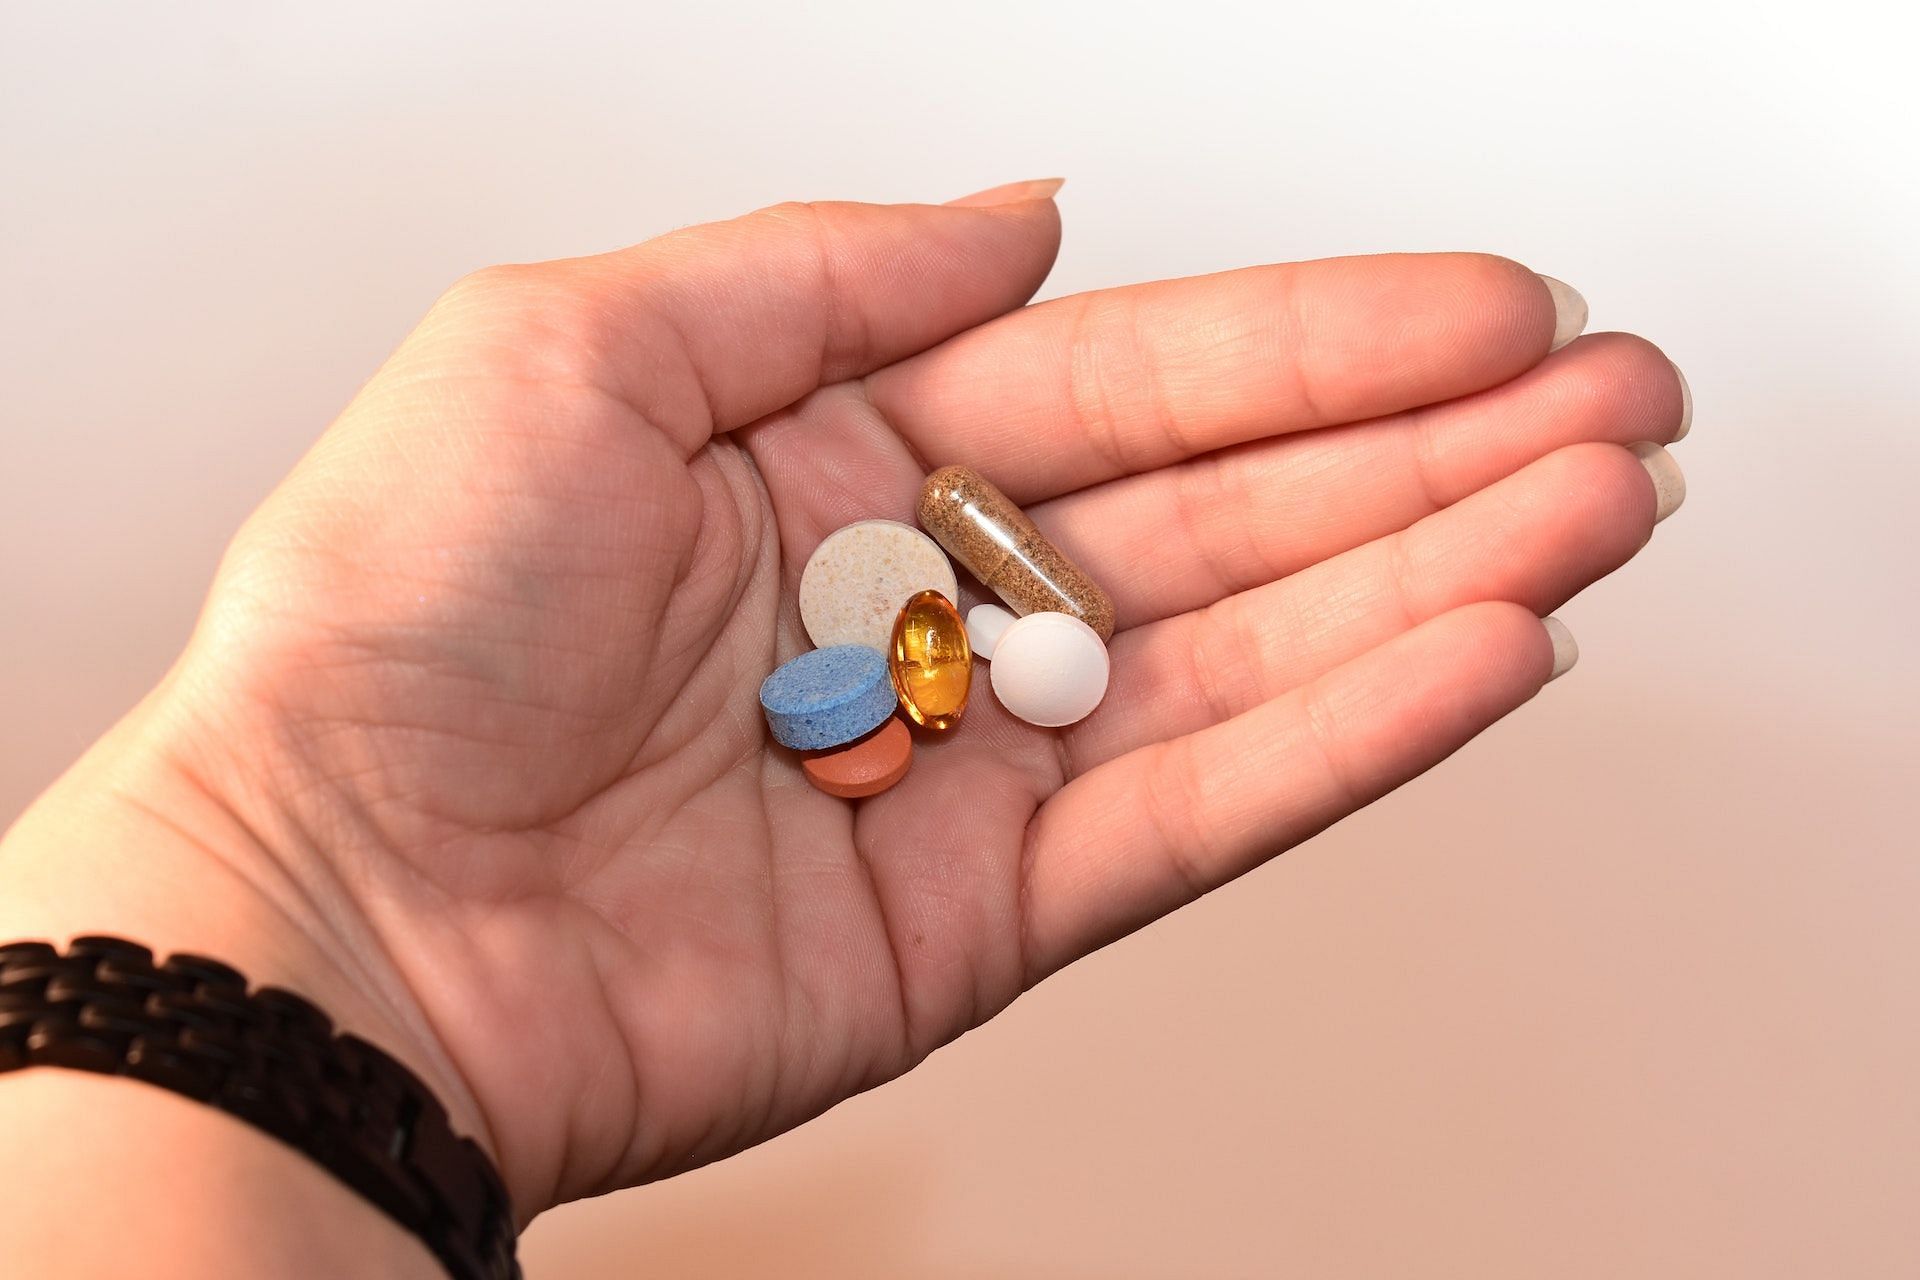 Antihistamine tablets can help. (Photo via Pexels/Dids)